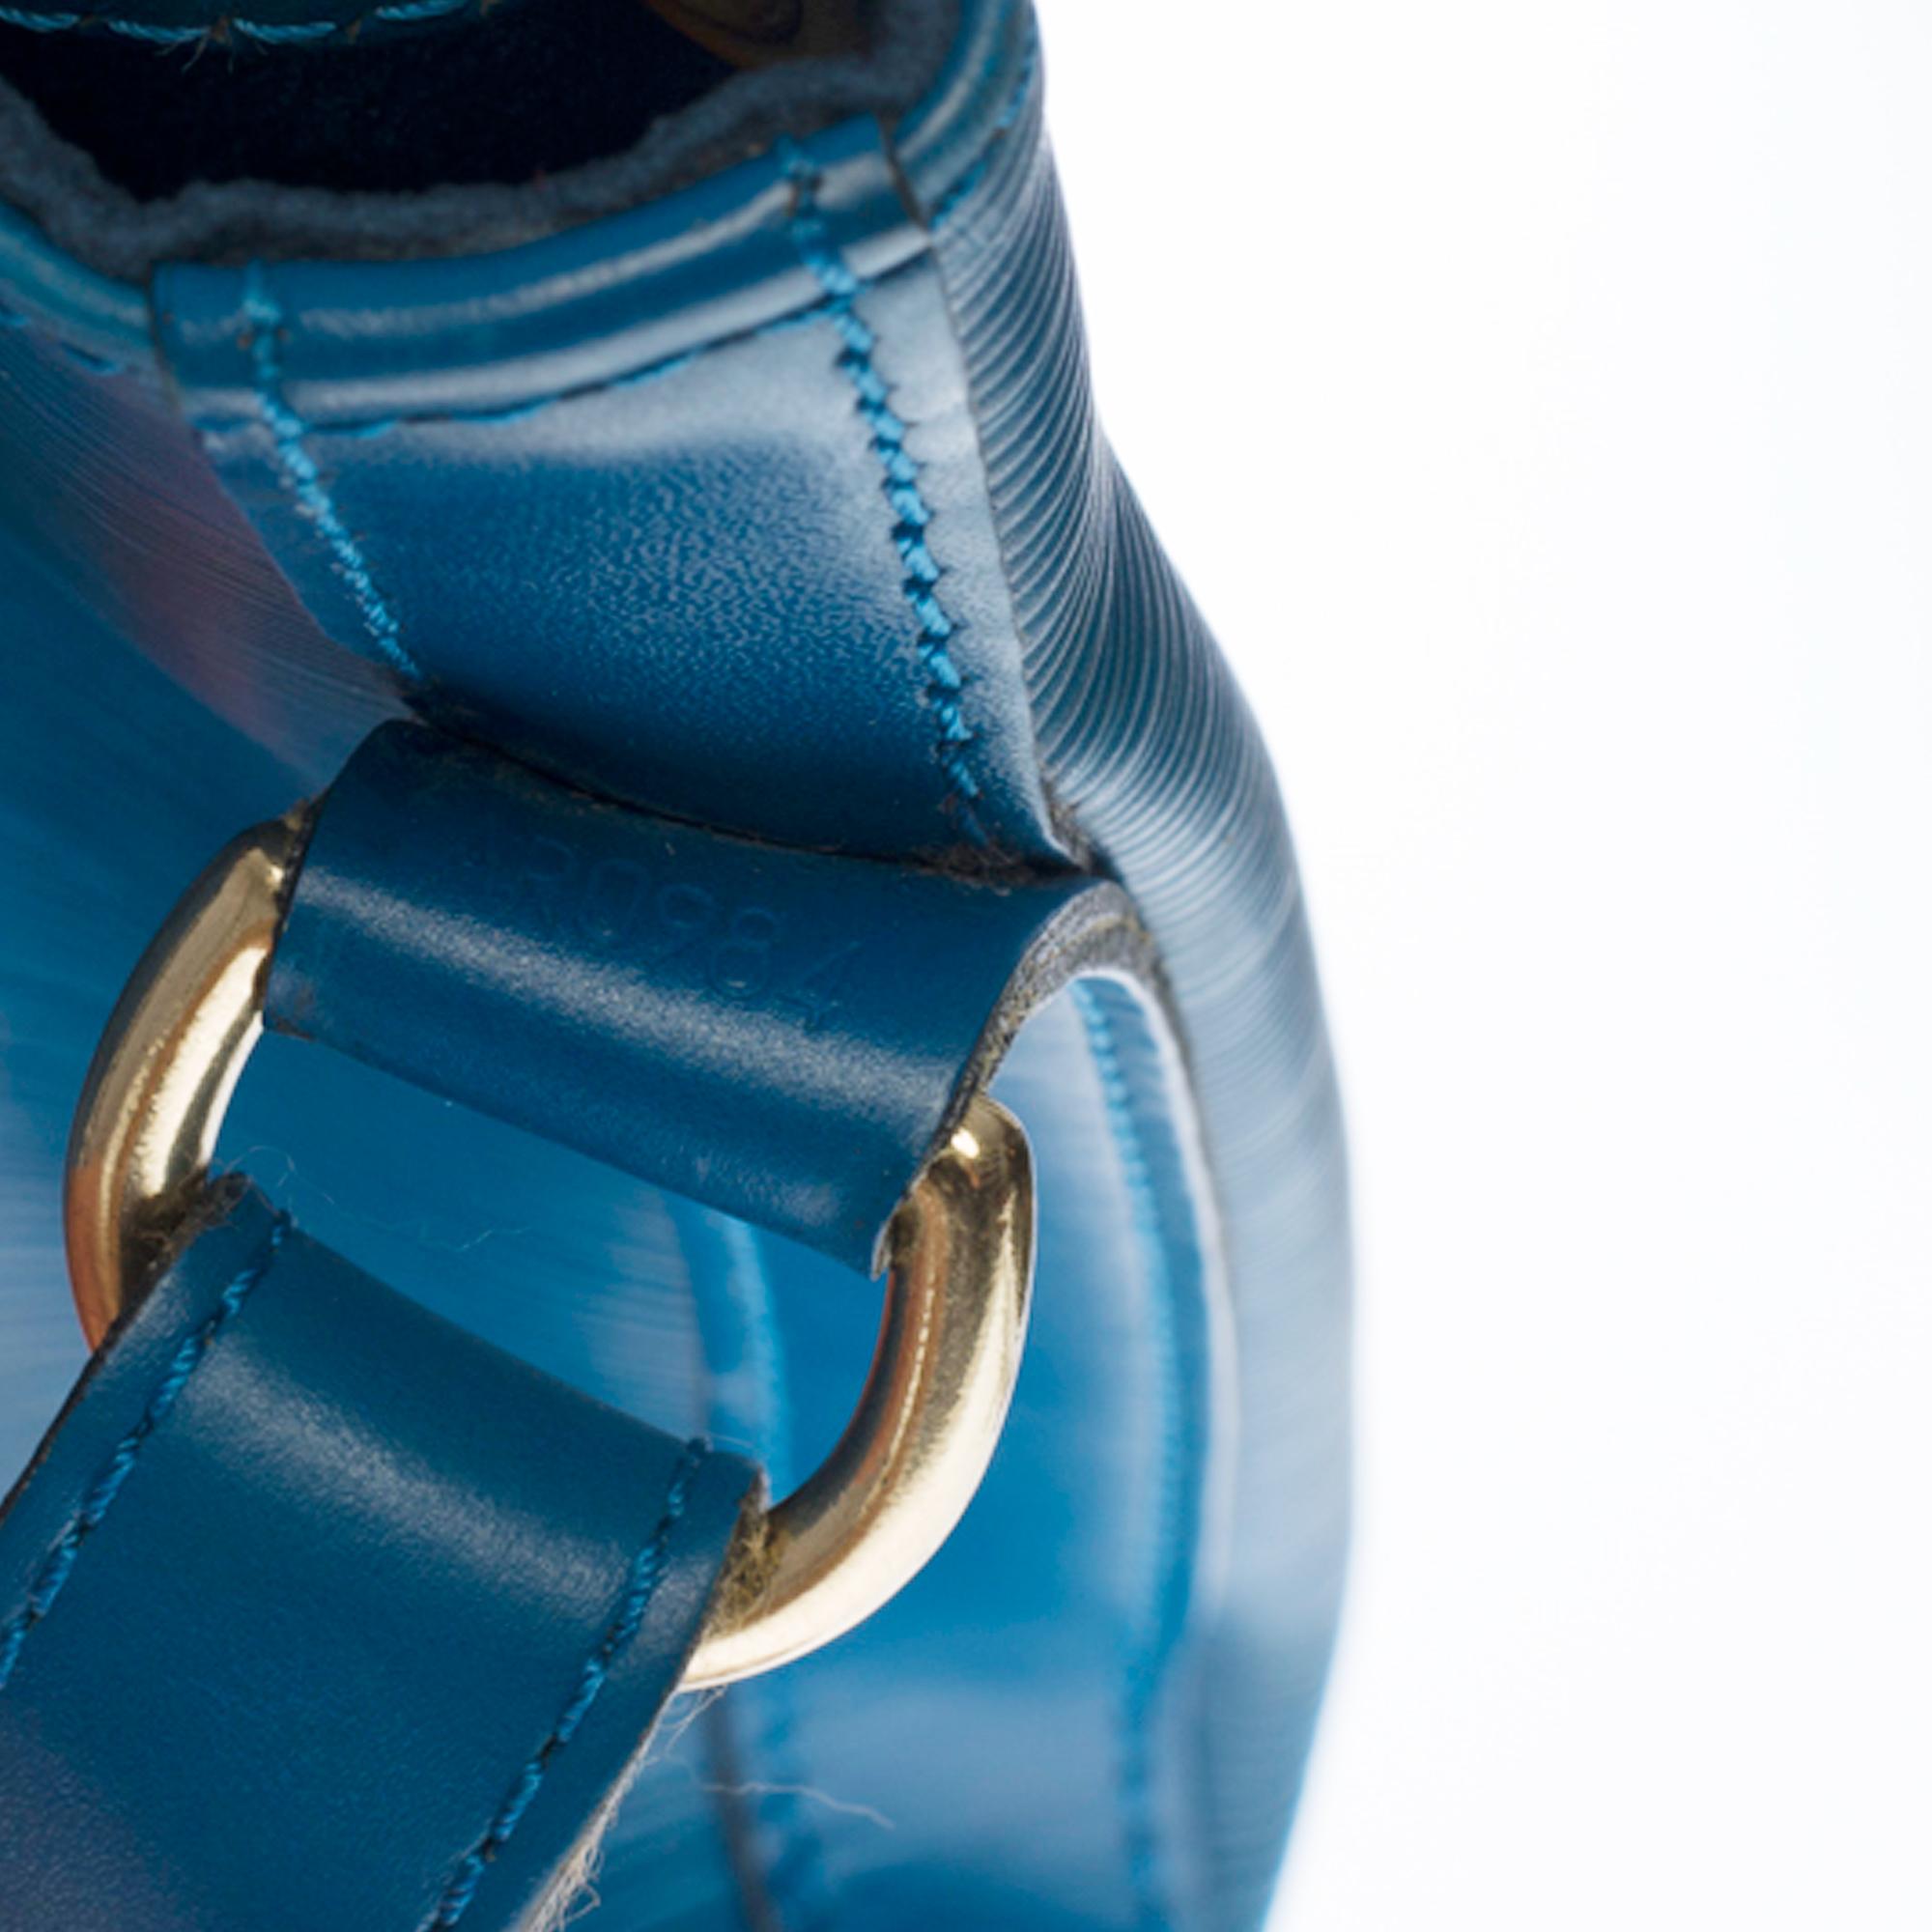 Louis Vuitton Noé Grand modele shoulder bag in blue epi leather with GHW 1